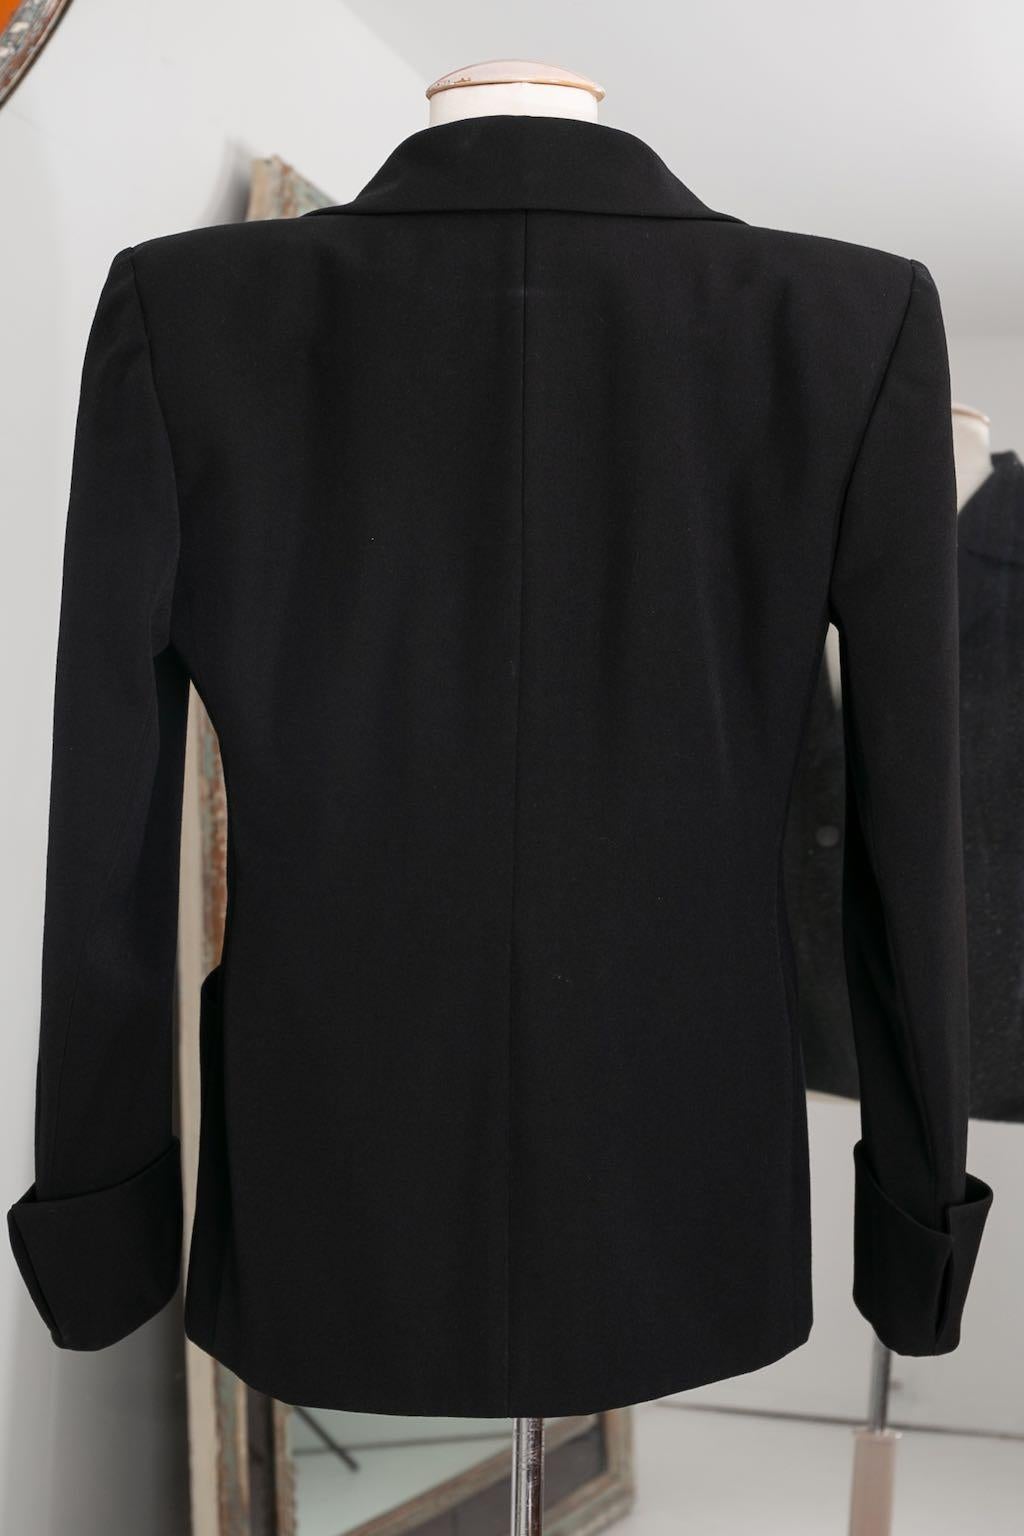 Yves Saint Laurent Haute Couture Black Skirt and Jacket Set, circa 1981/1982 11